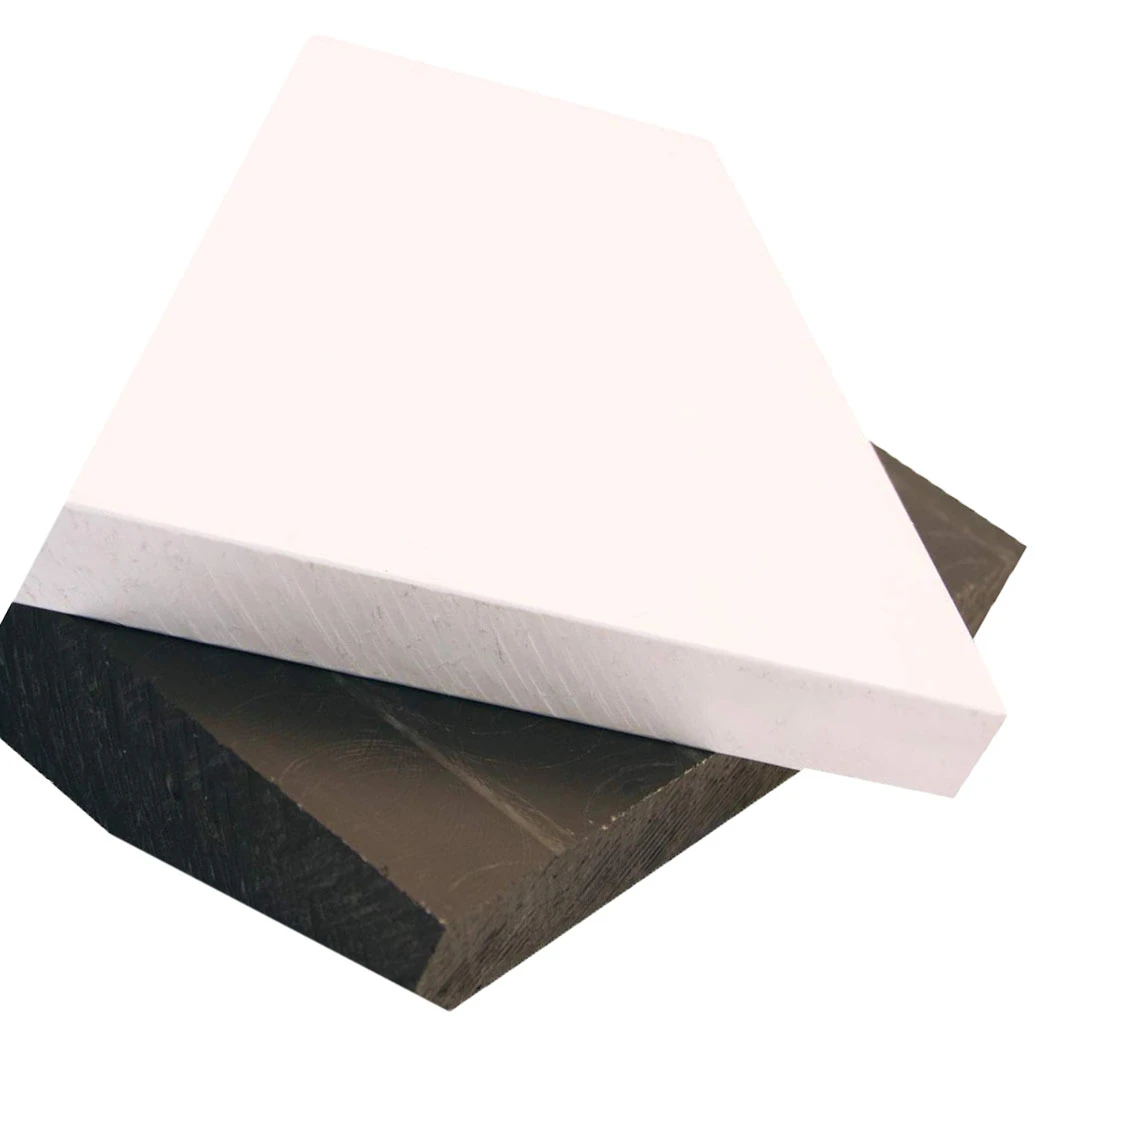 HDPE Sheet High Density Polyethylene - Plastic Sheet 1/2" Thick 12" Length x 48 Width Black